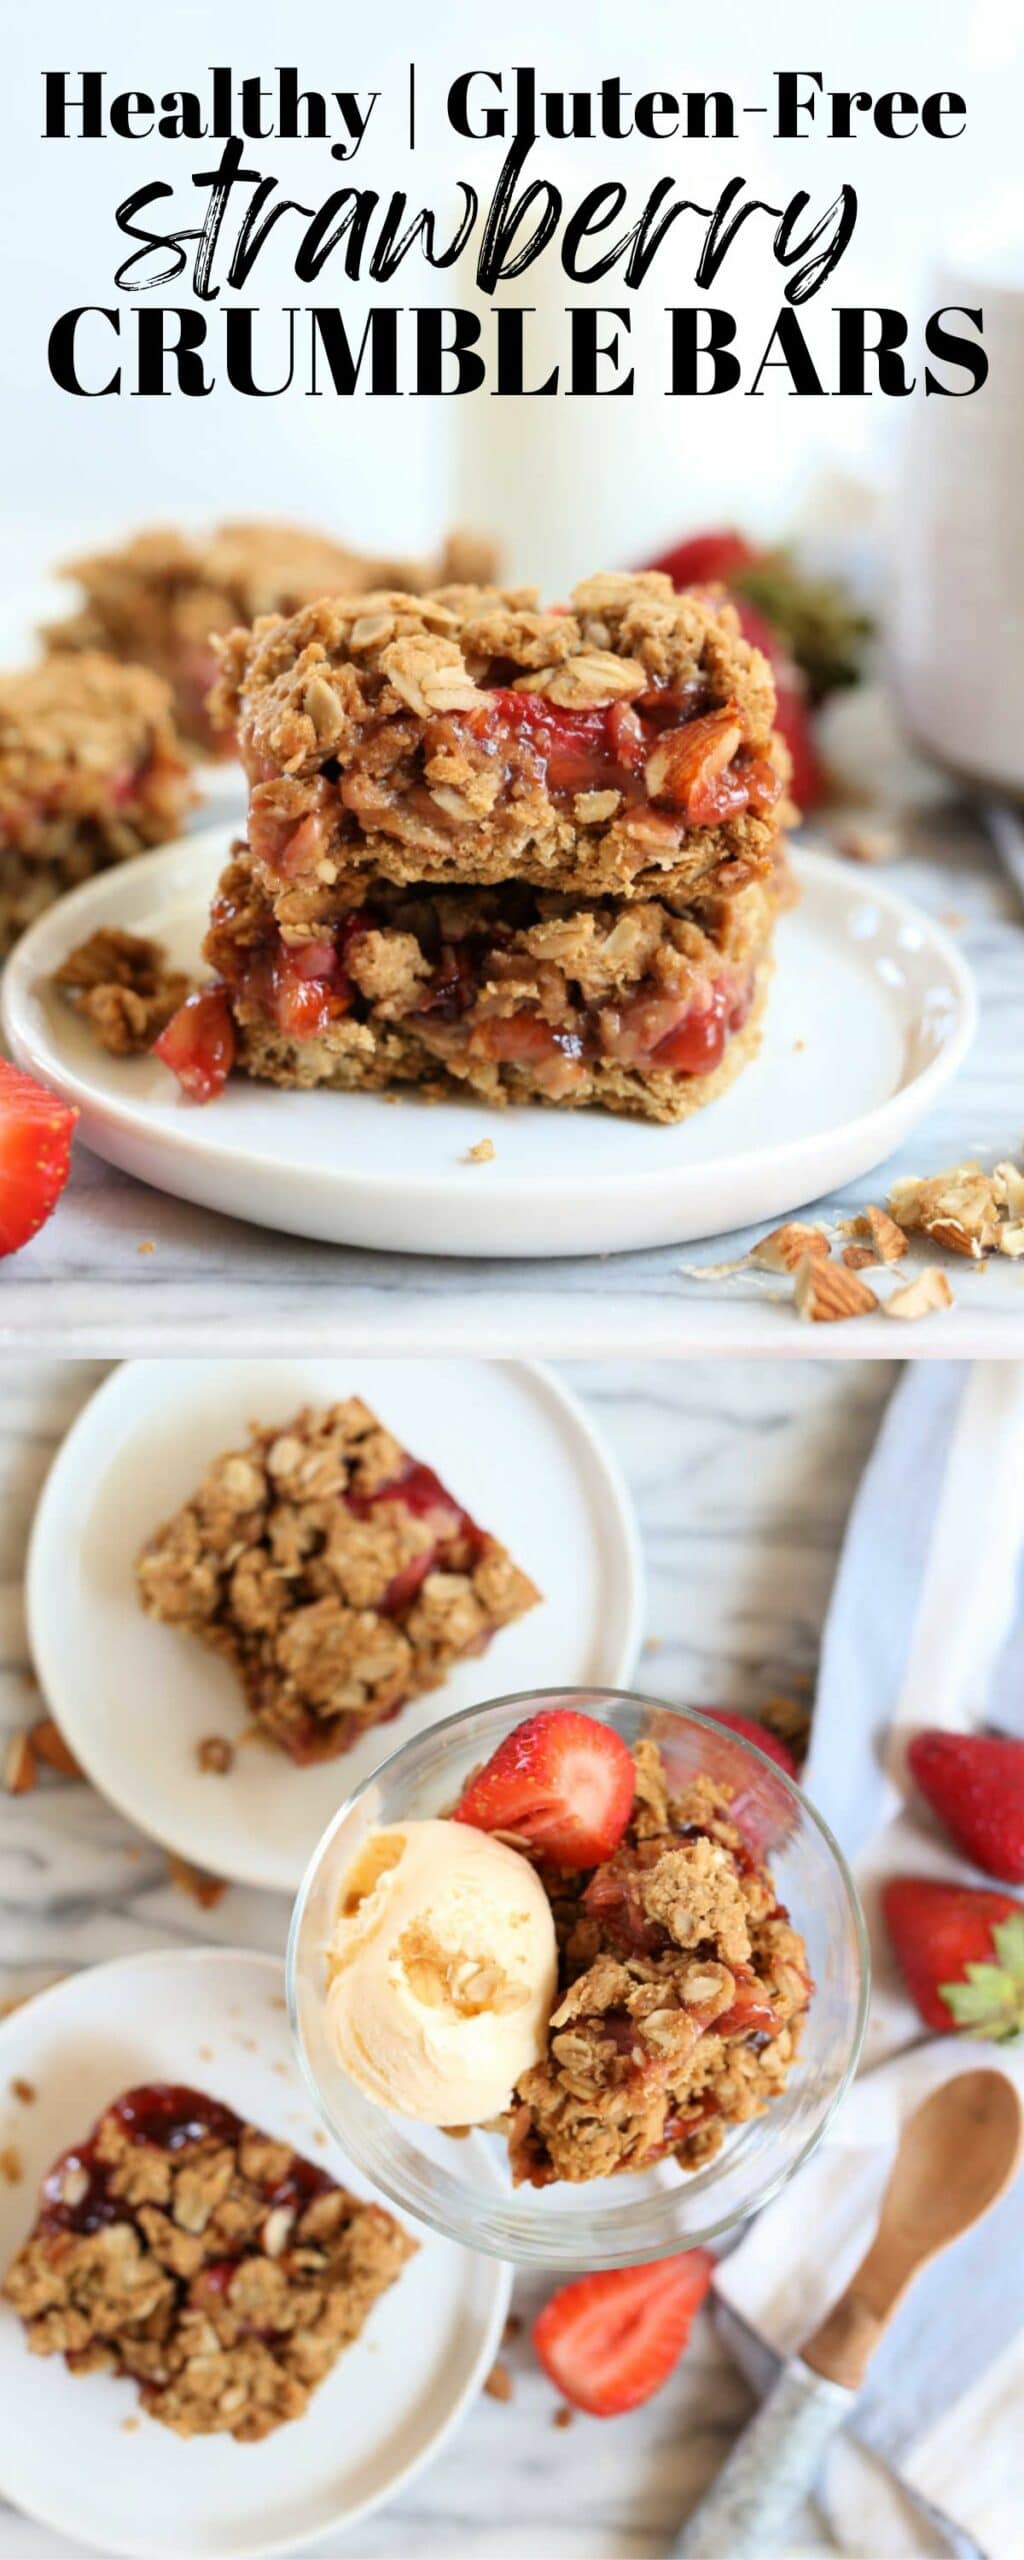 Healthy Gluten-Free Strawberry Crumble Bars Recipe